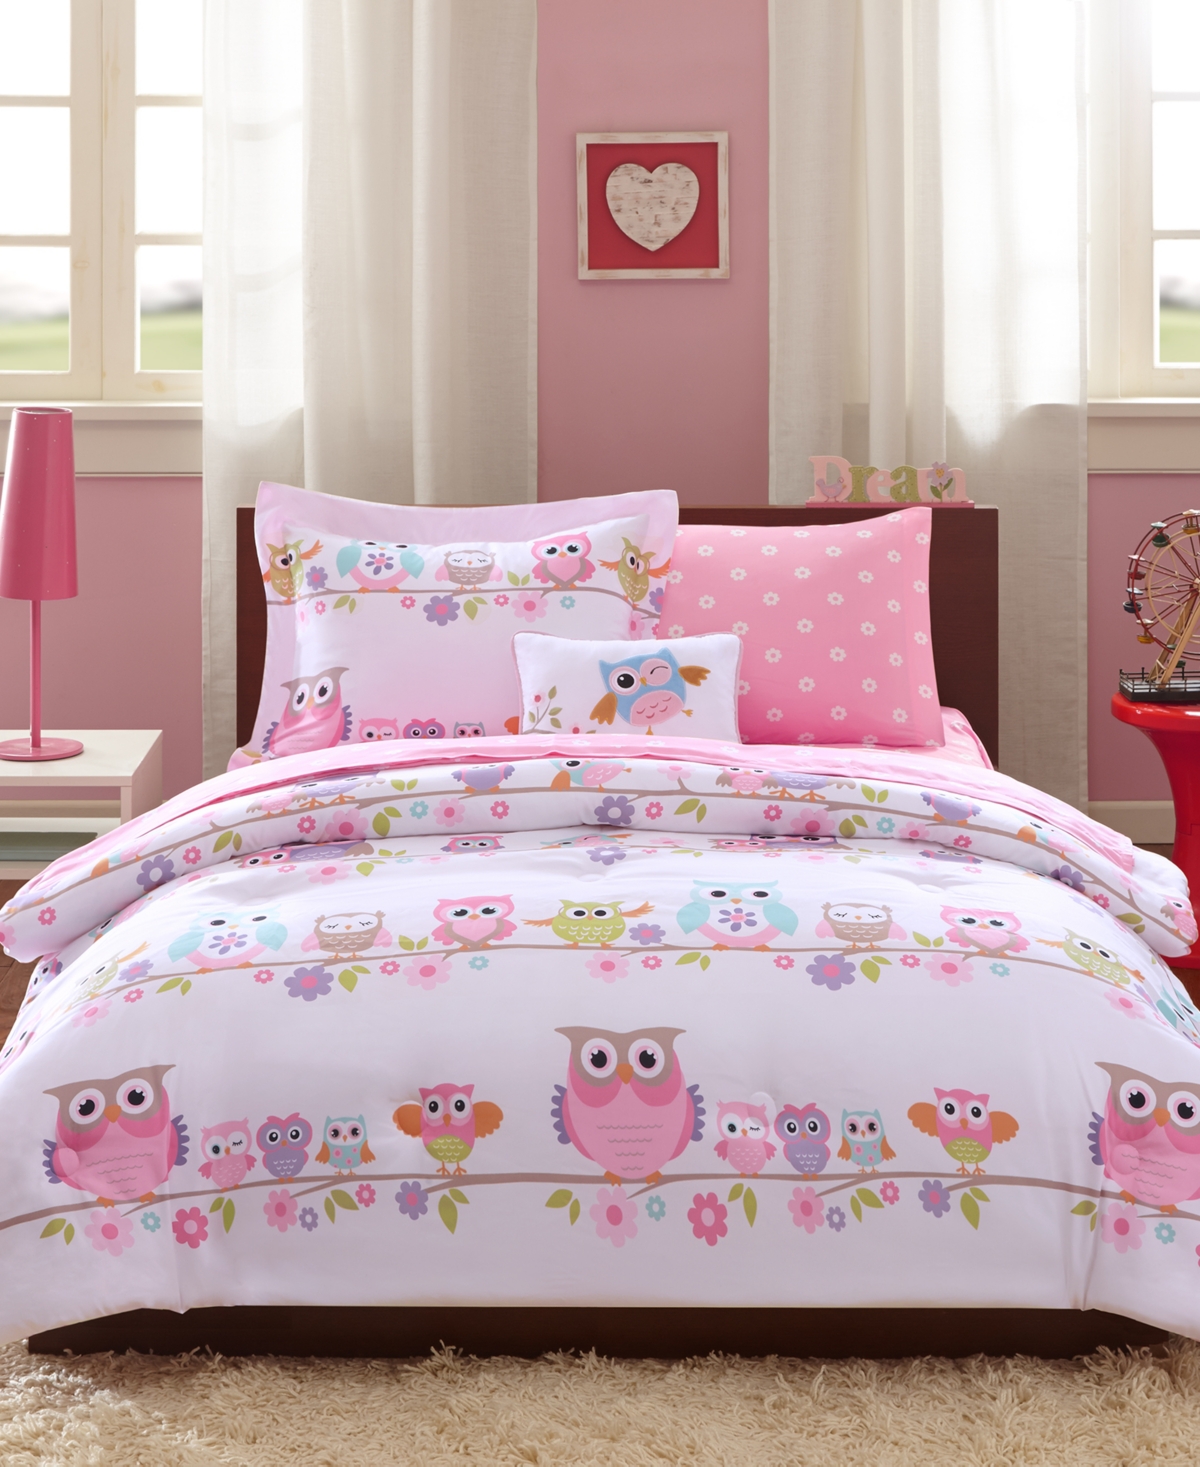 Mi Zone Kids Wise Wendy, White, 8-pc. Reversible Full Comforter Set Bedding In Pink